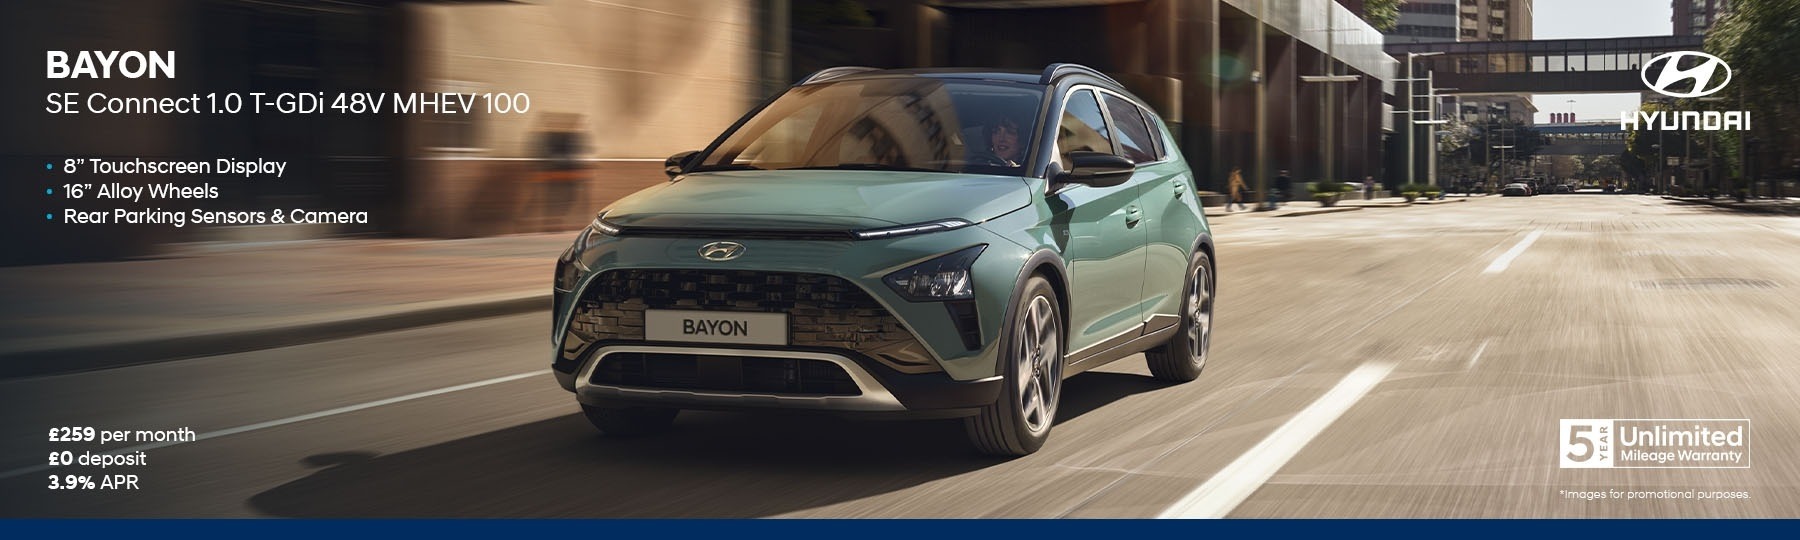 Hyundai BAYON New Car Offer